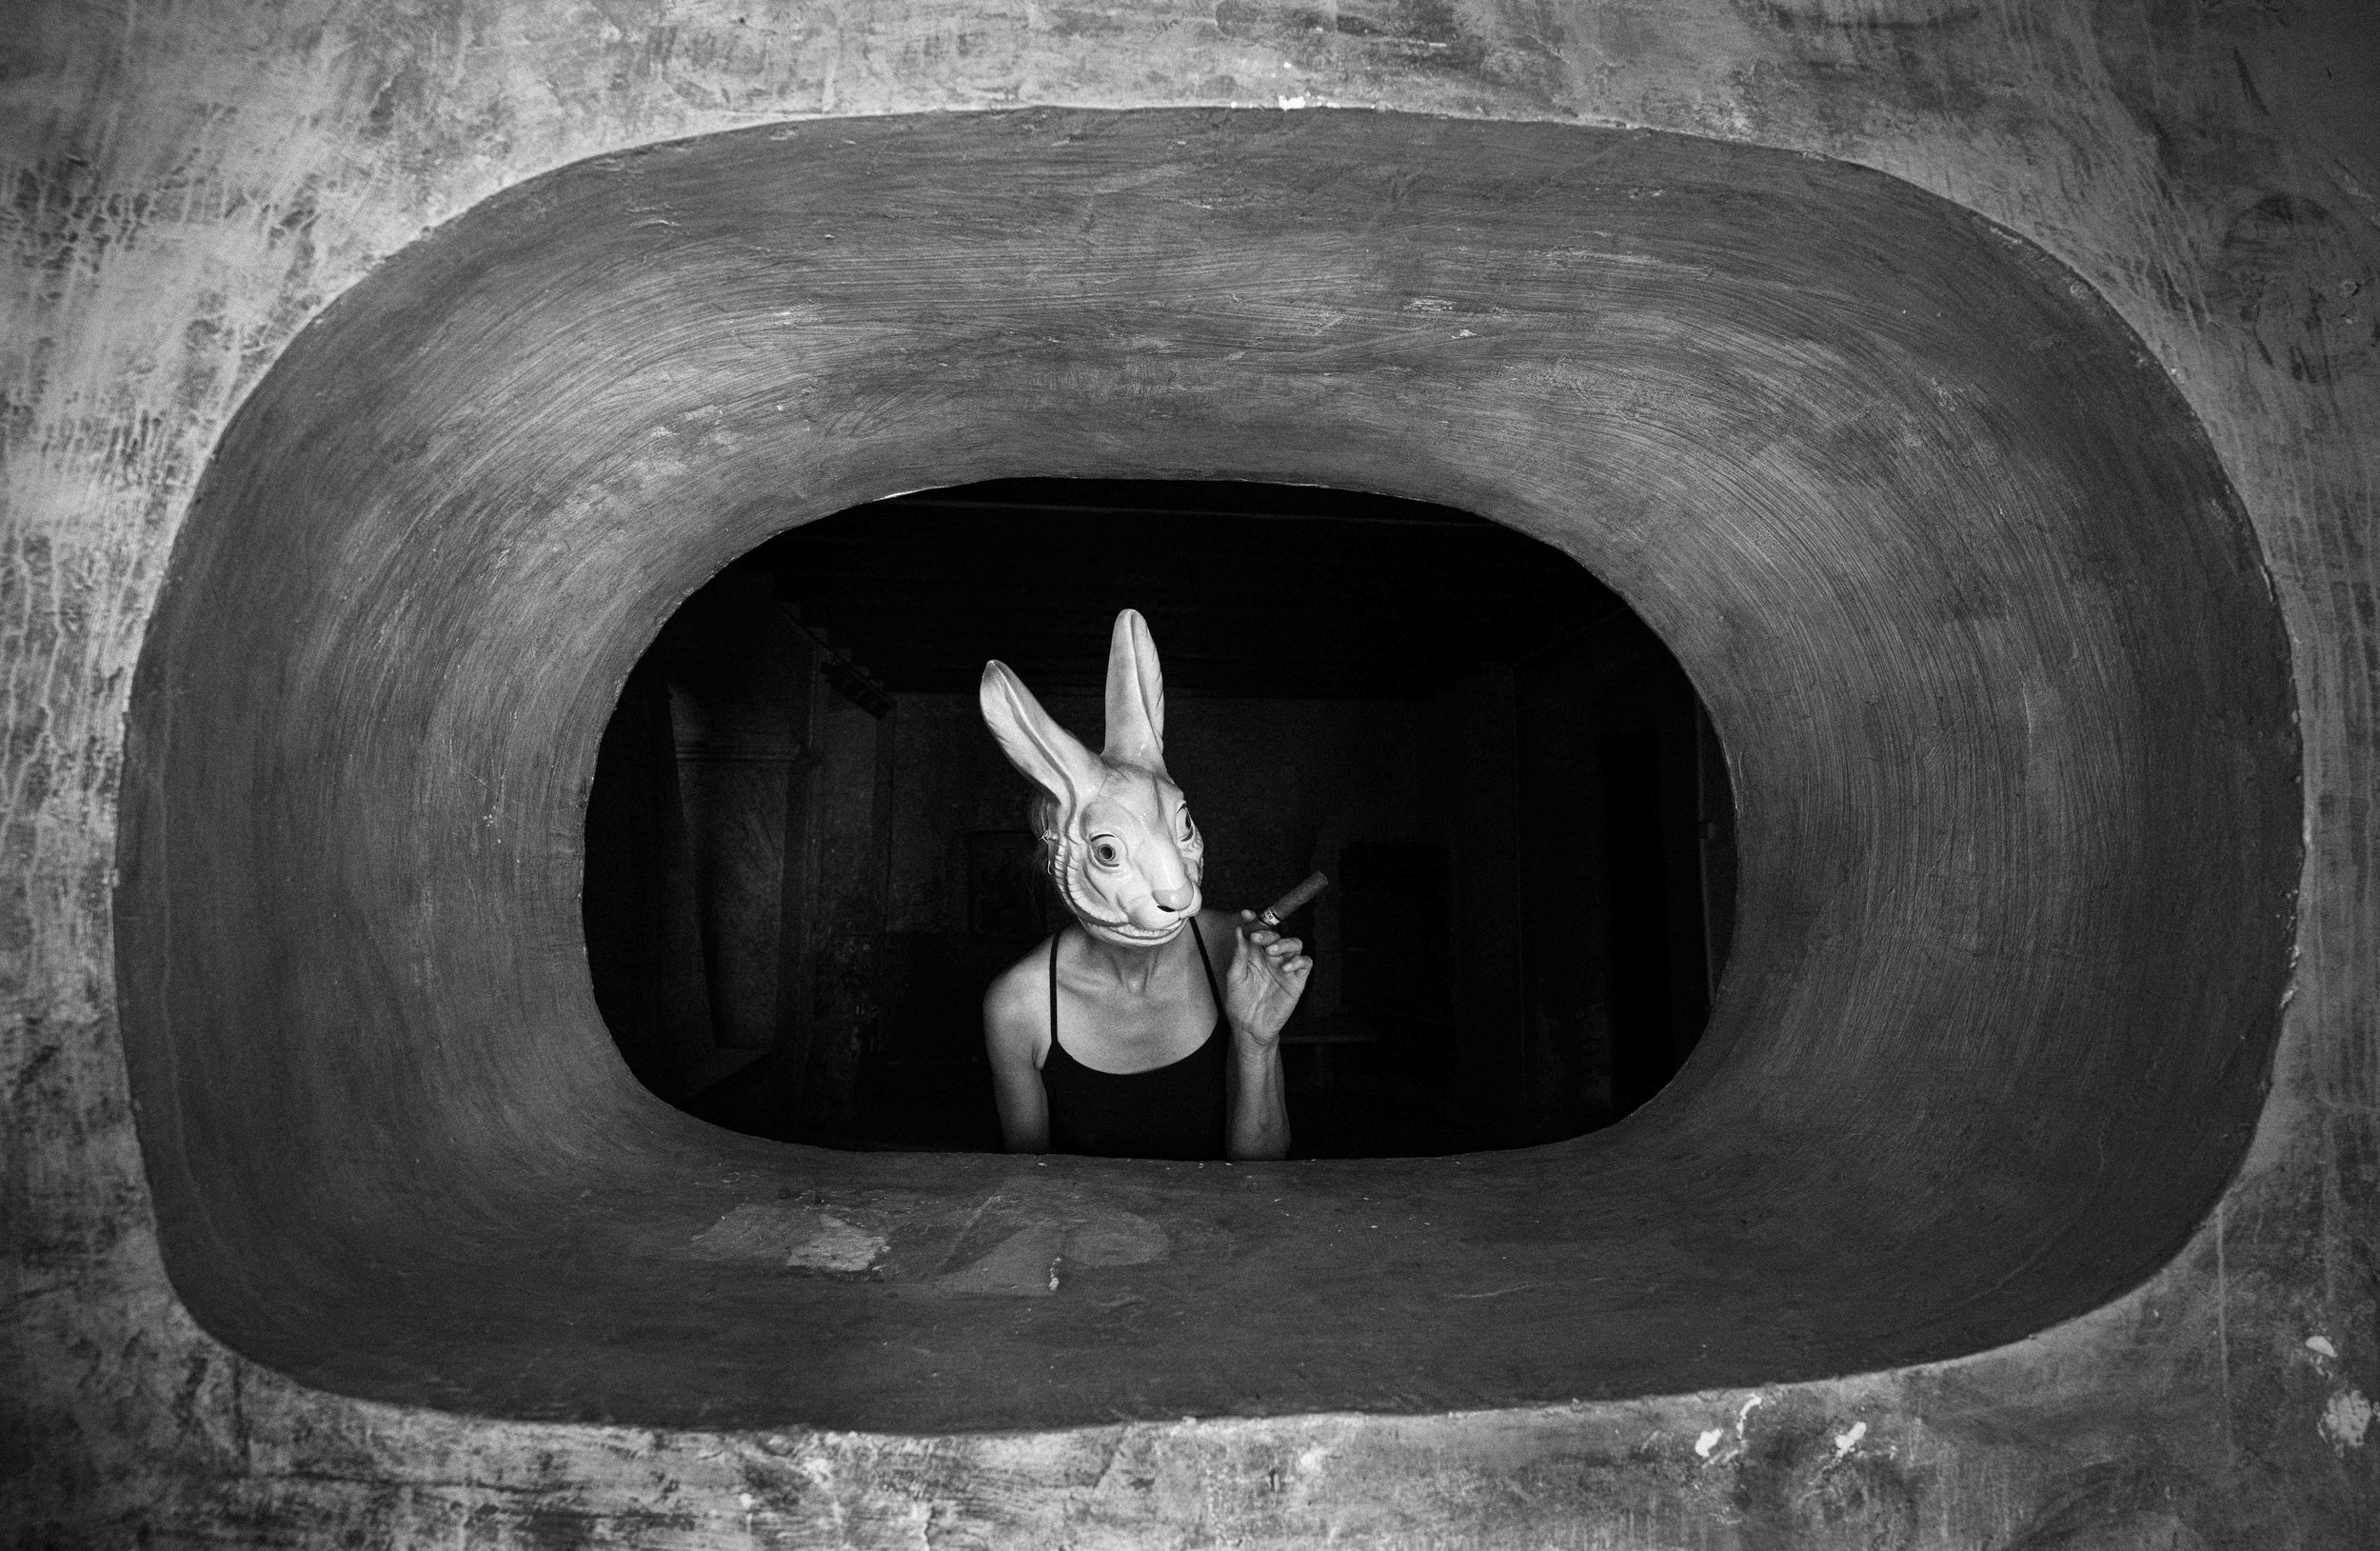  Self Portrait: Down the Rabbit Hole (of COVID19).  